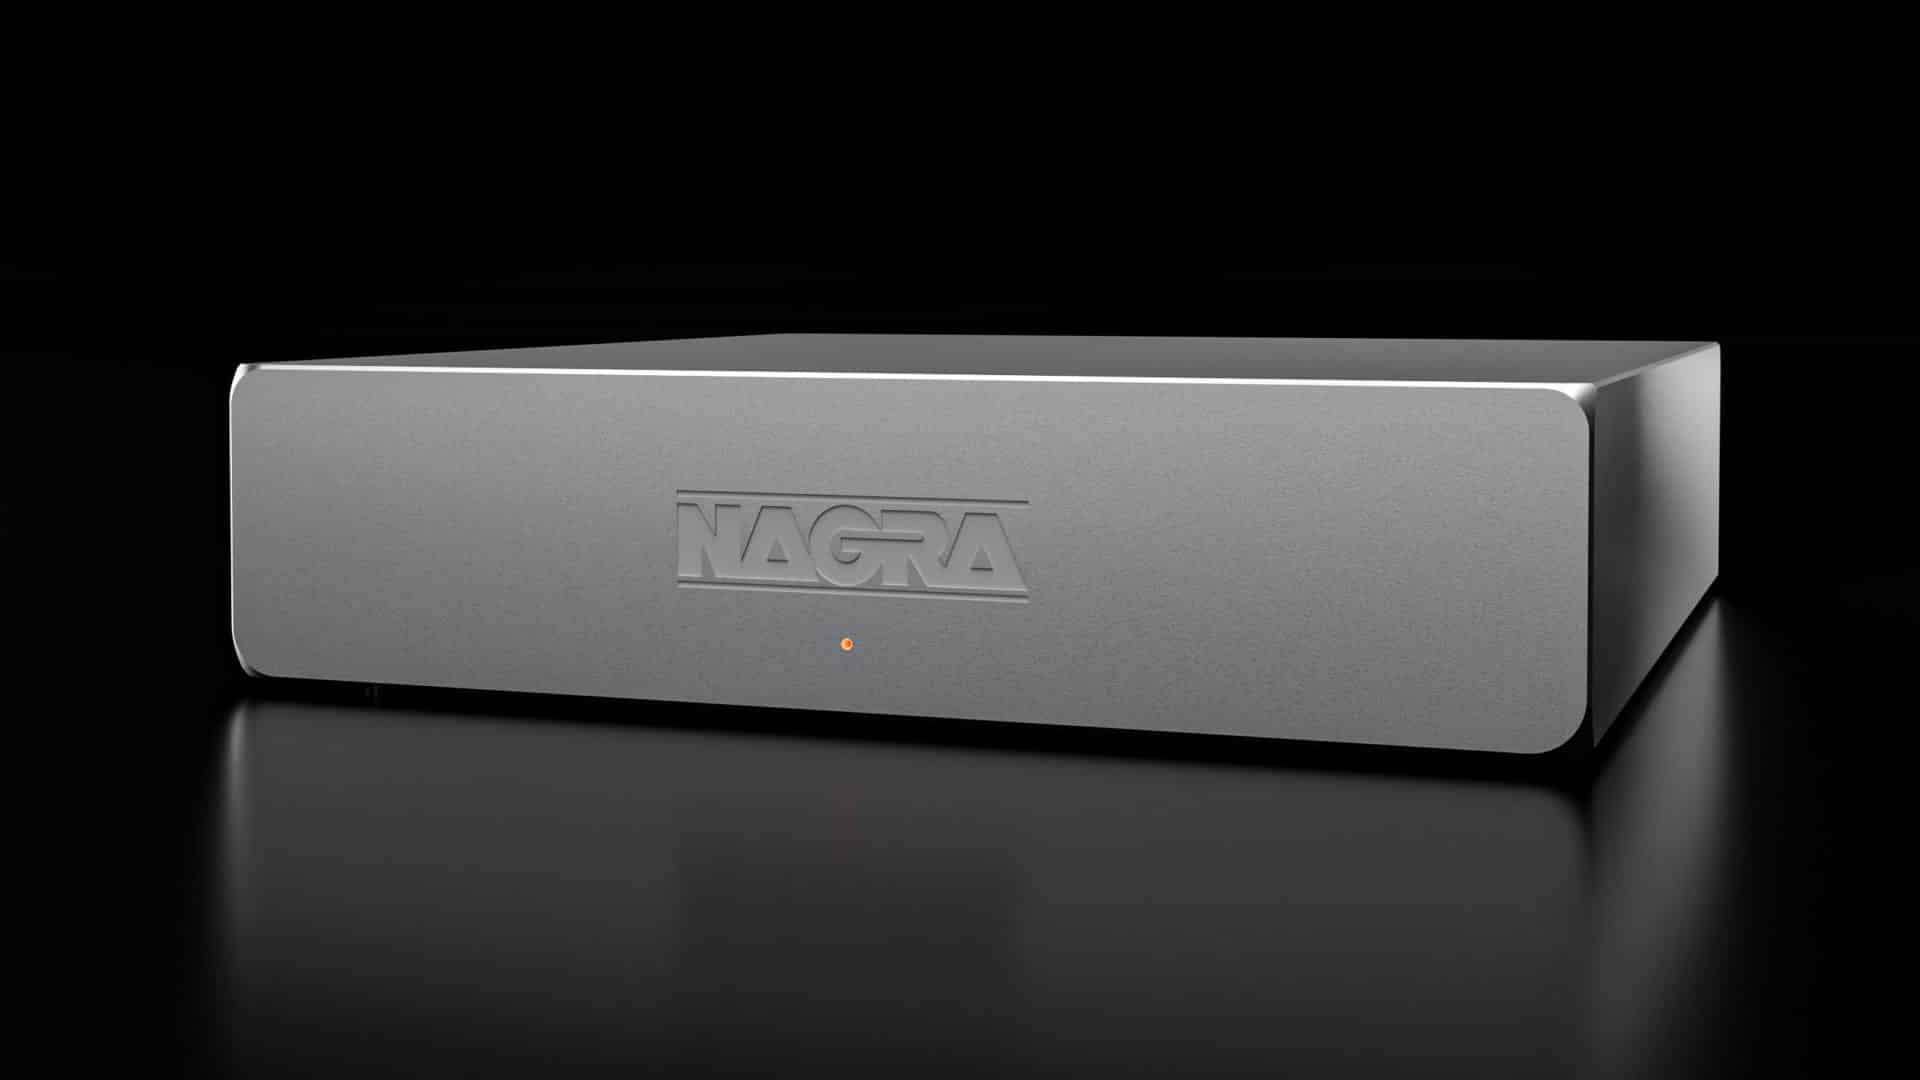 Nagra Streamer digital